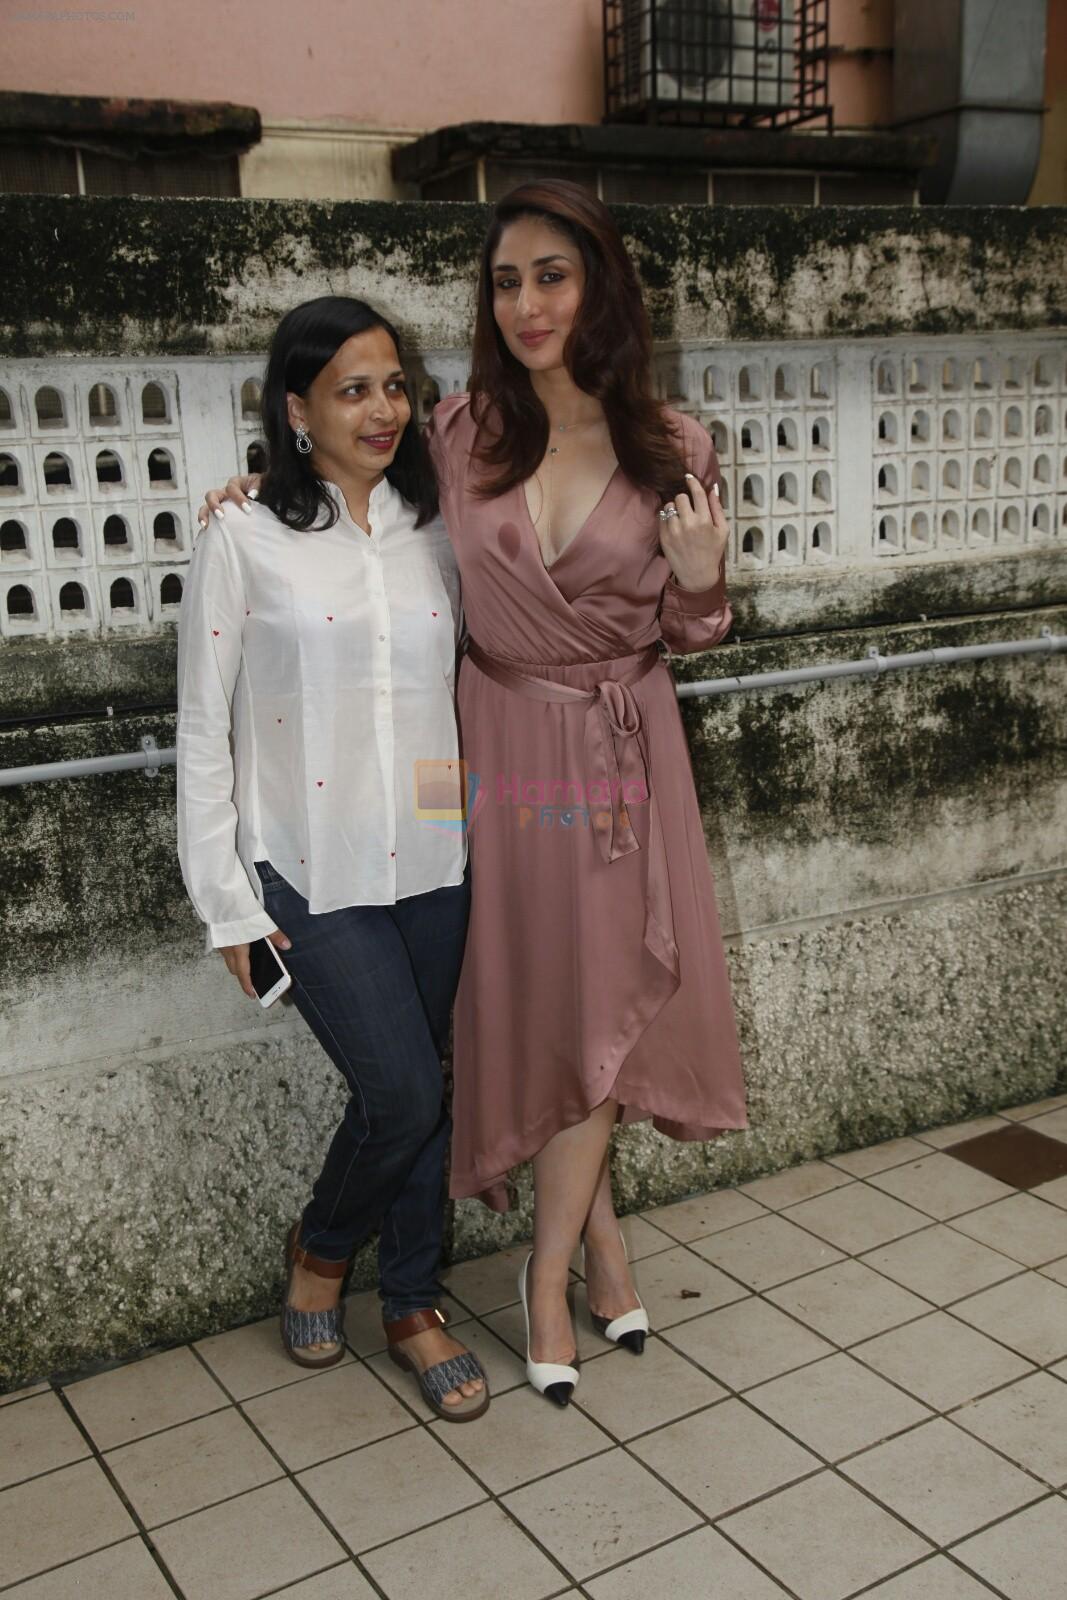 Kareena Kapoor Spotted With Her Nutritionist Rujuta Diwekar on 15th July 2017